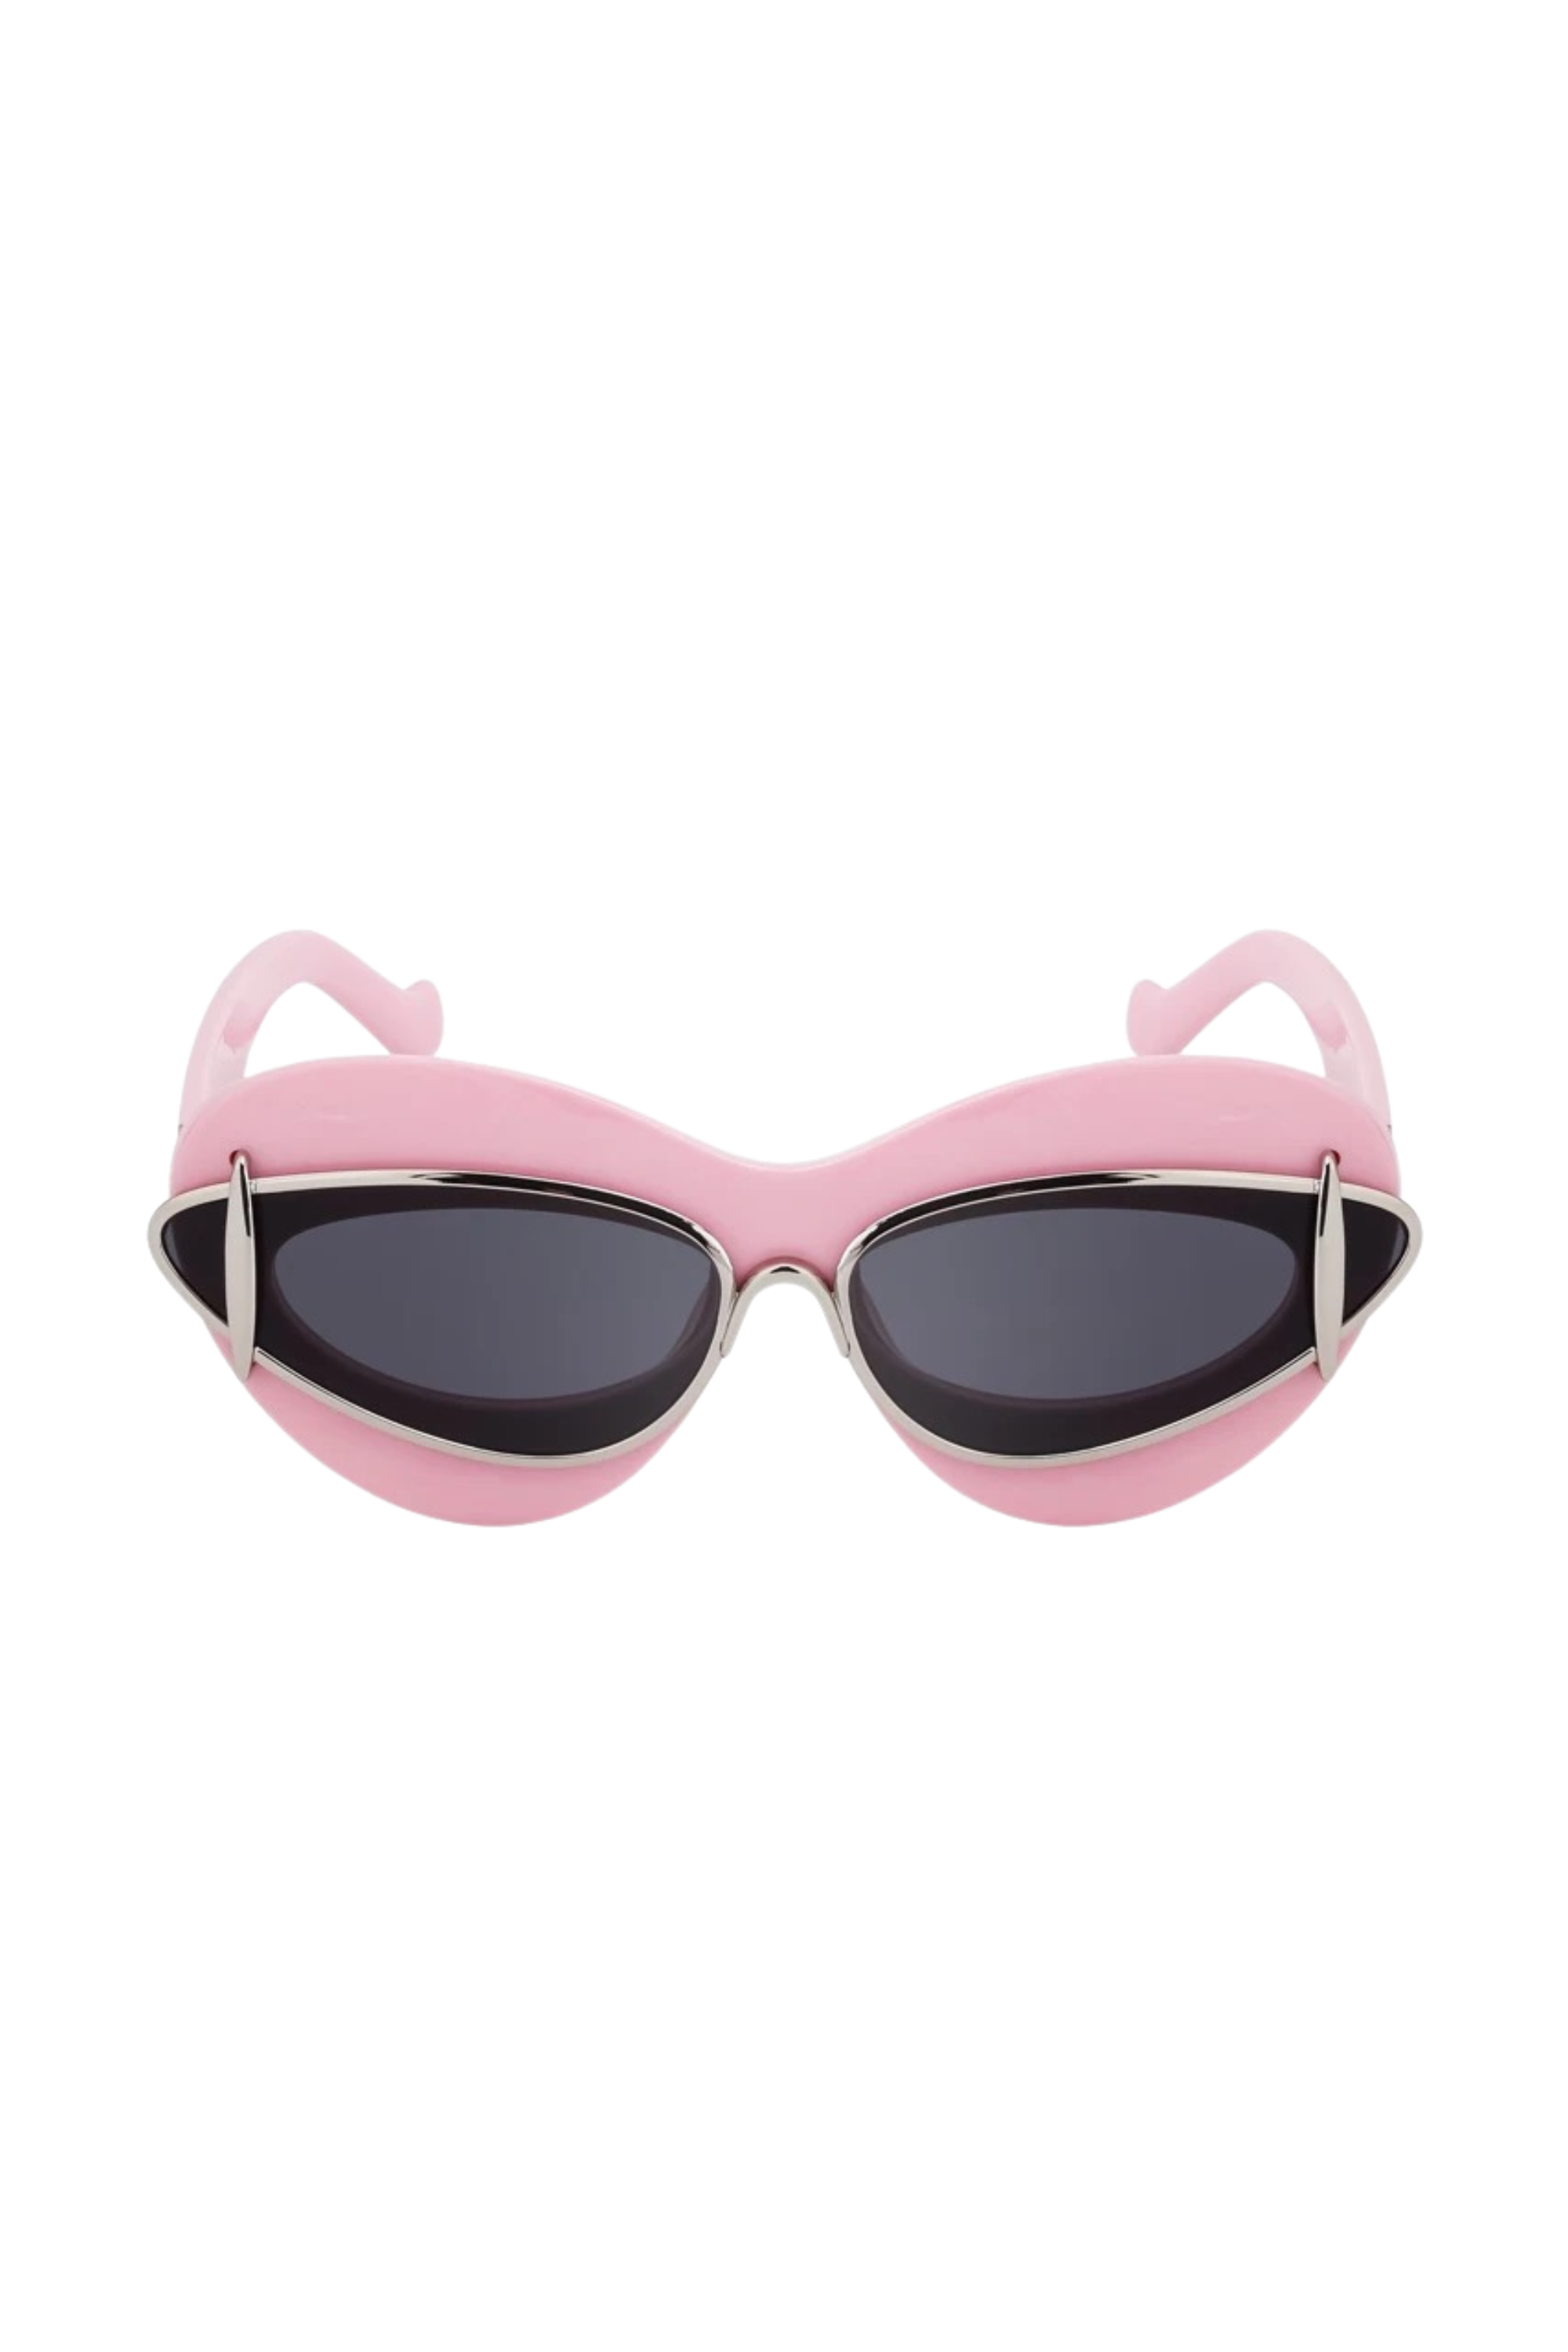 GOLDxTEAL double frame cat eye sunglasses.